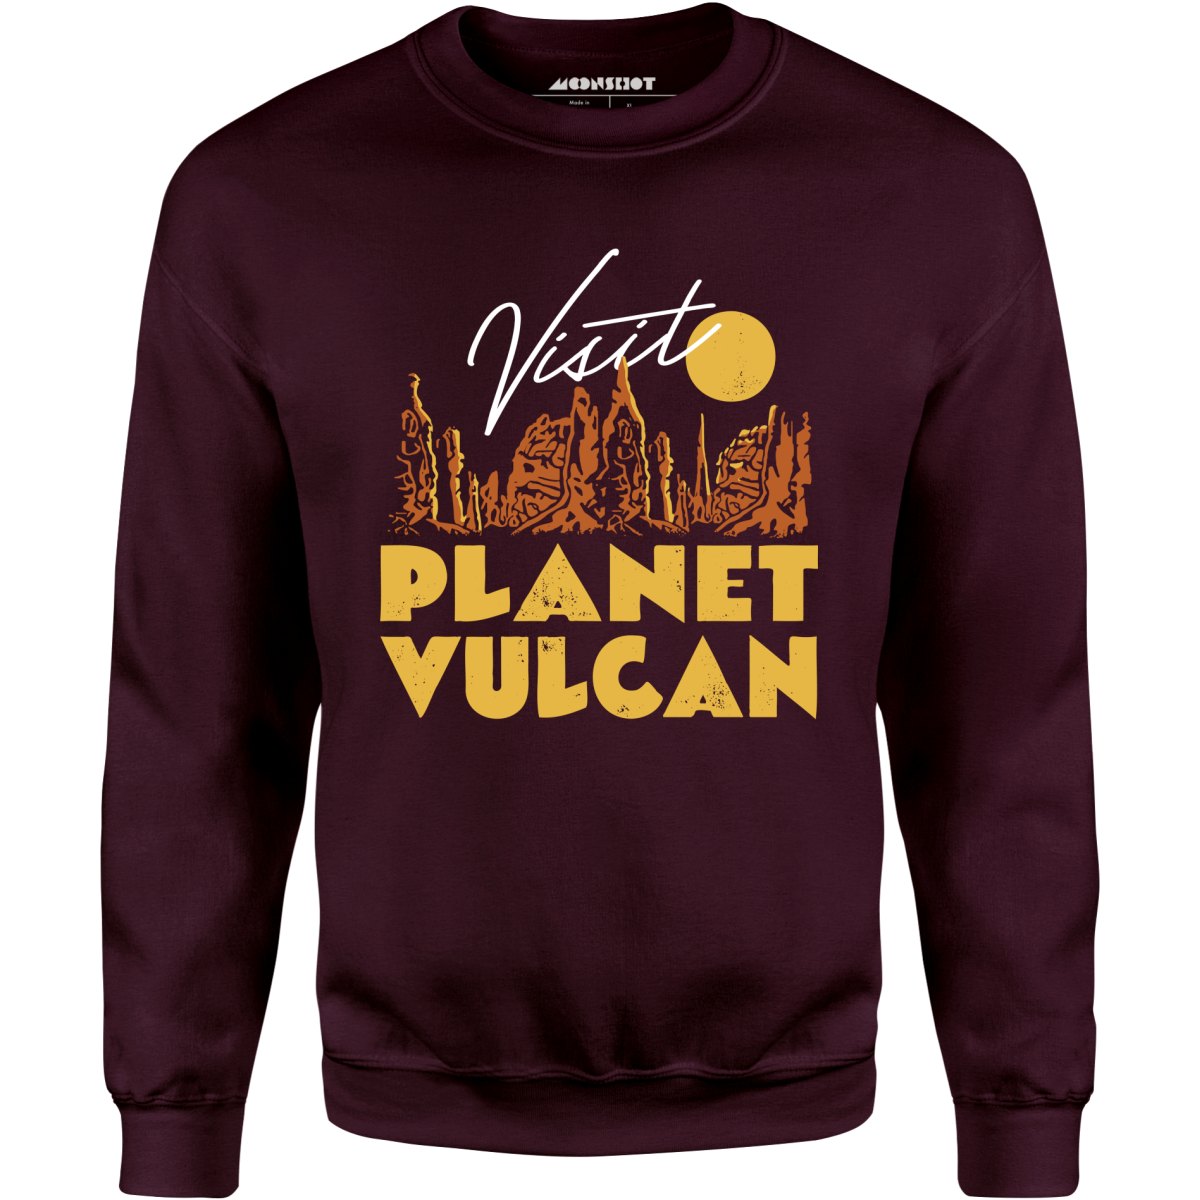 Visit Planet Vulcan - Unisex Sweatshirt